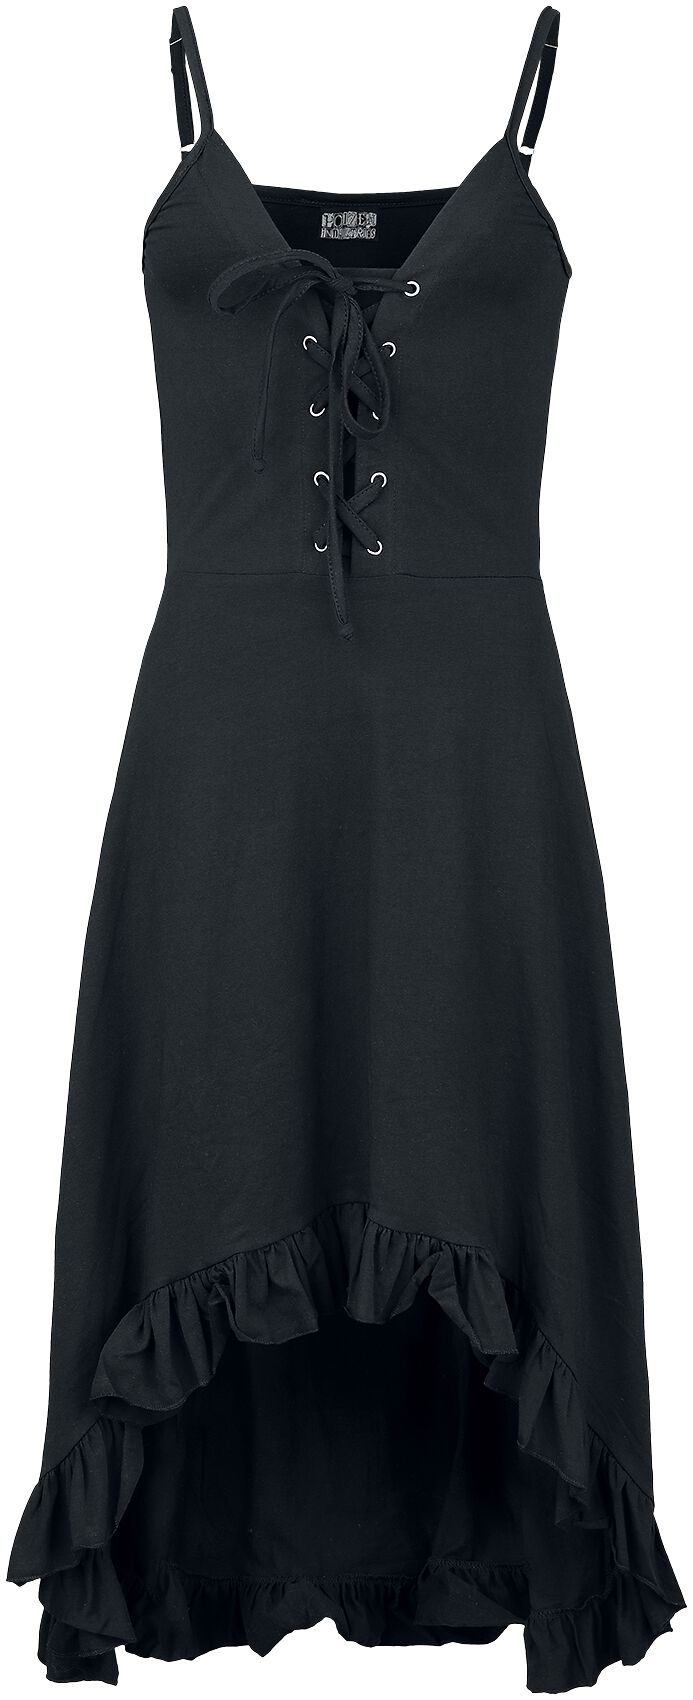 Innocent Astraea Dress Kurzes Kleid schwarz in 3XL